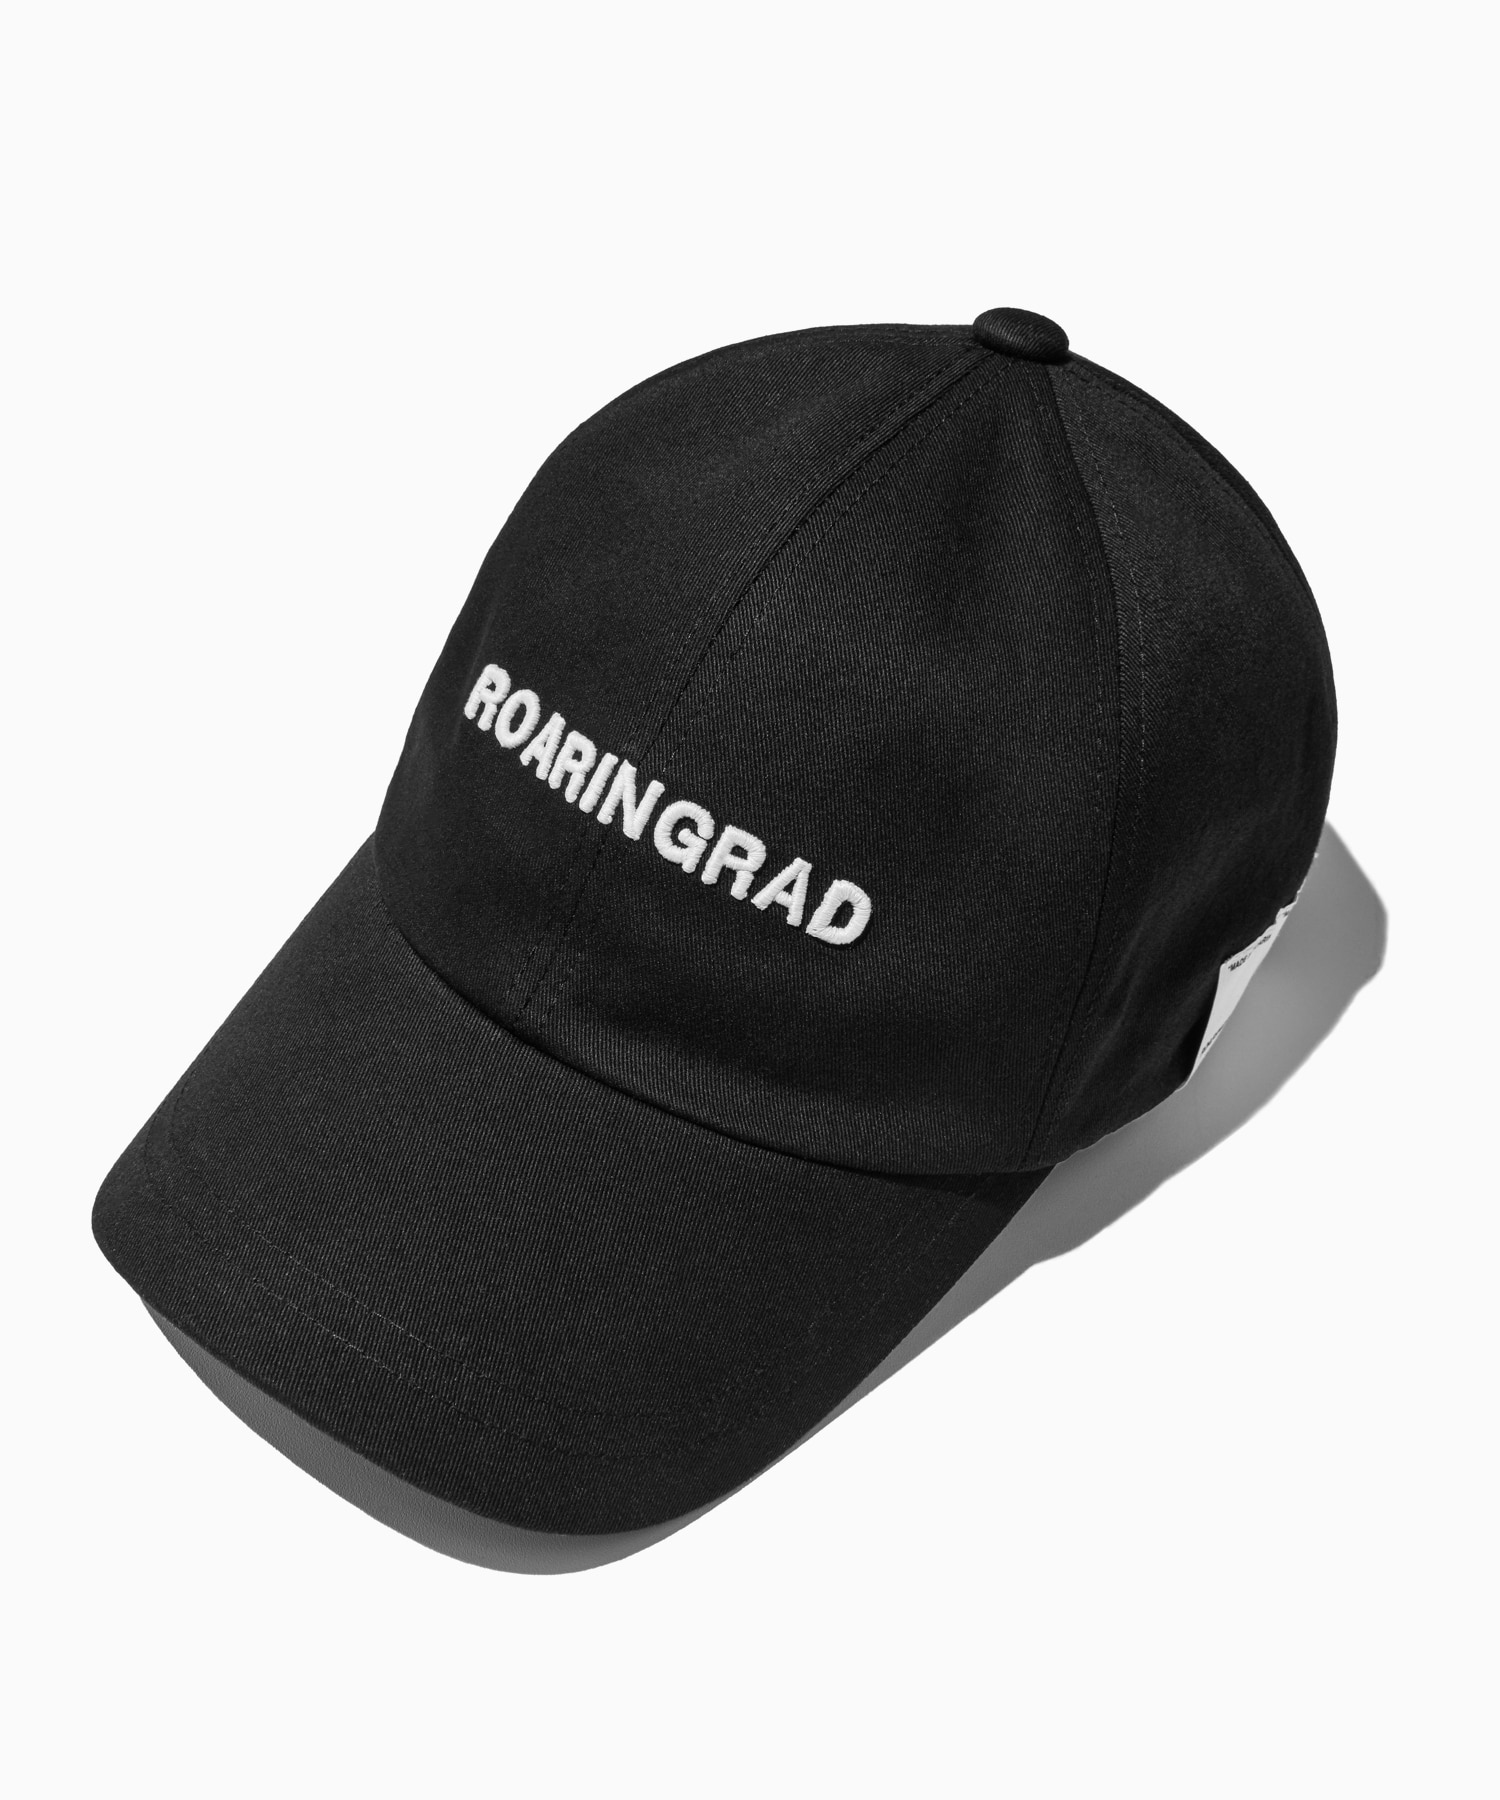 signature label ball cap black - 로어링라드(ROARINGRAD)